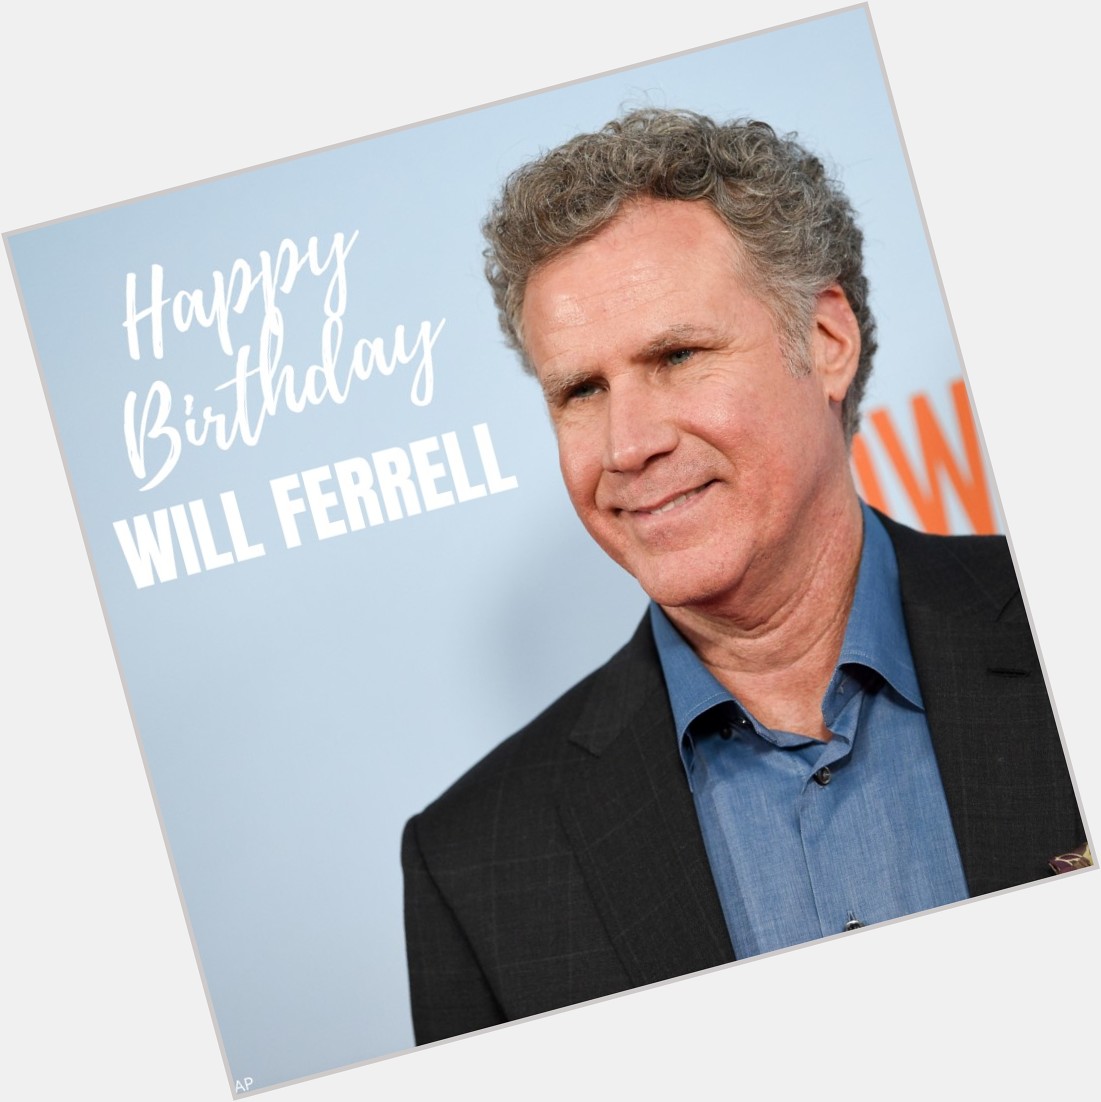 HAPPY BIRTHDAY! Will Ferrell turns 53 today. 